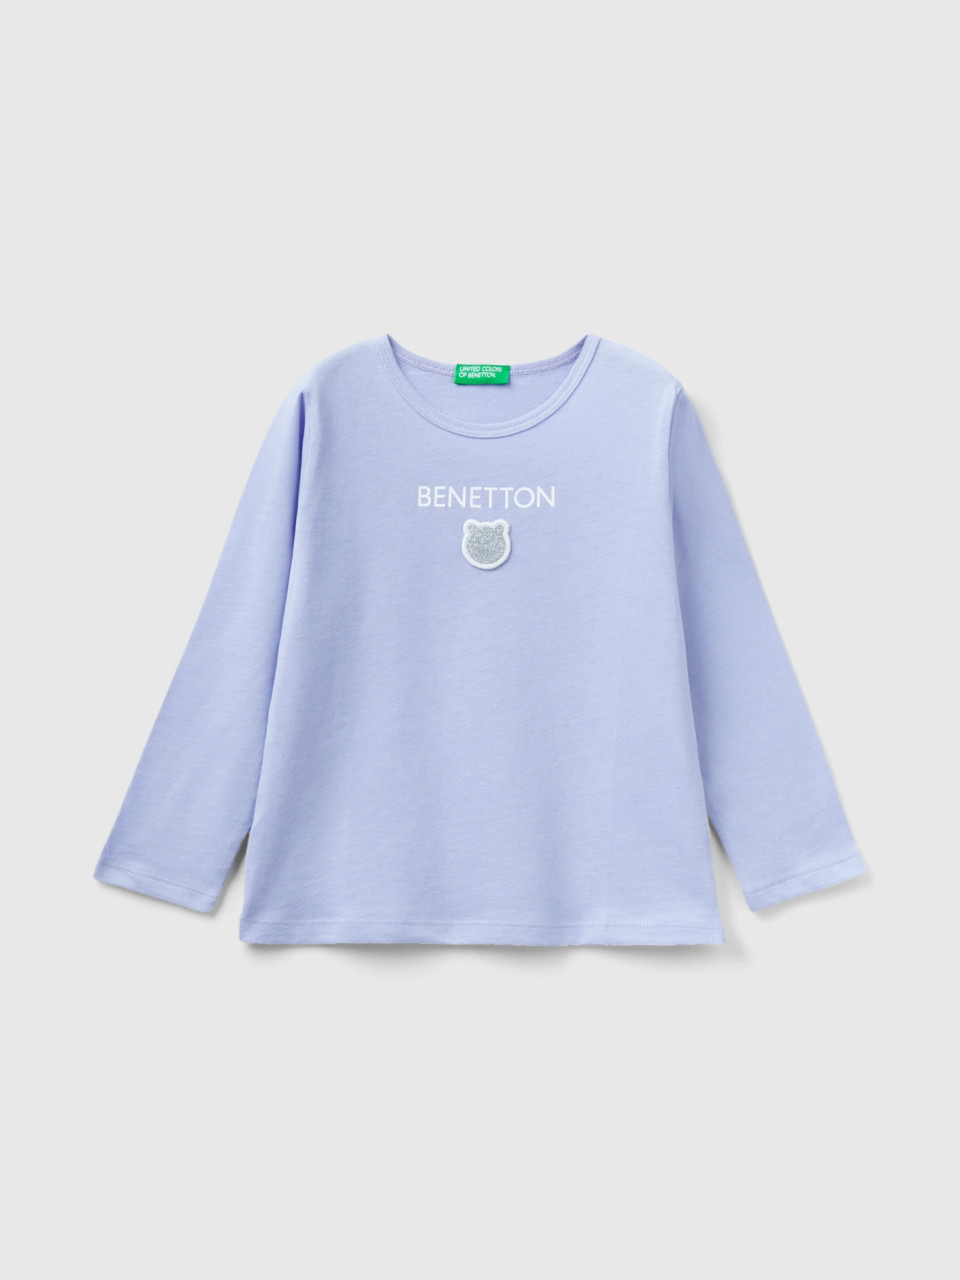 Benetton, Organic Cotton T-shirt With Glittery Print, Lilac, Kids